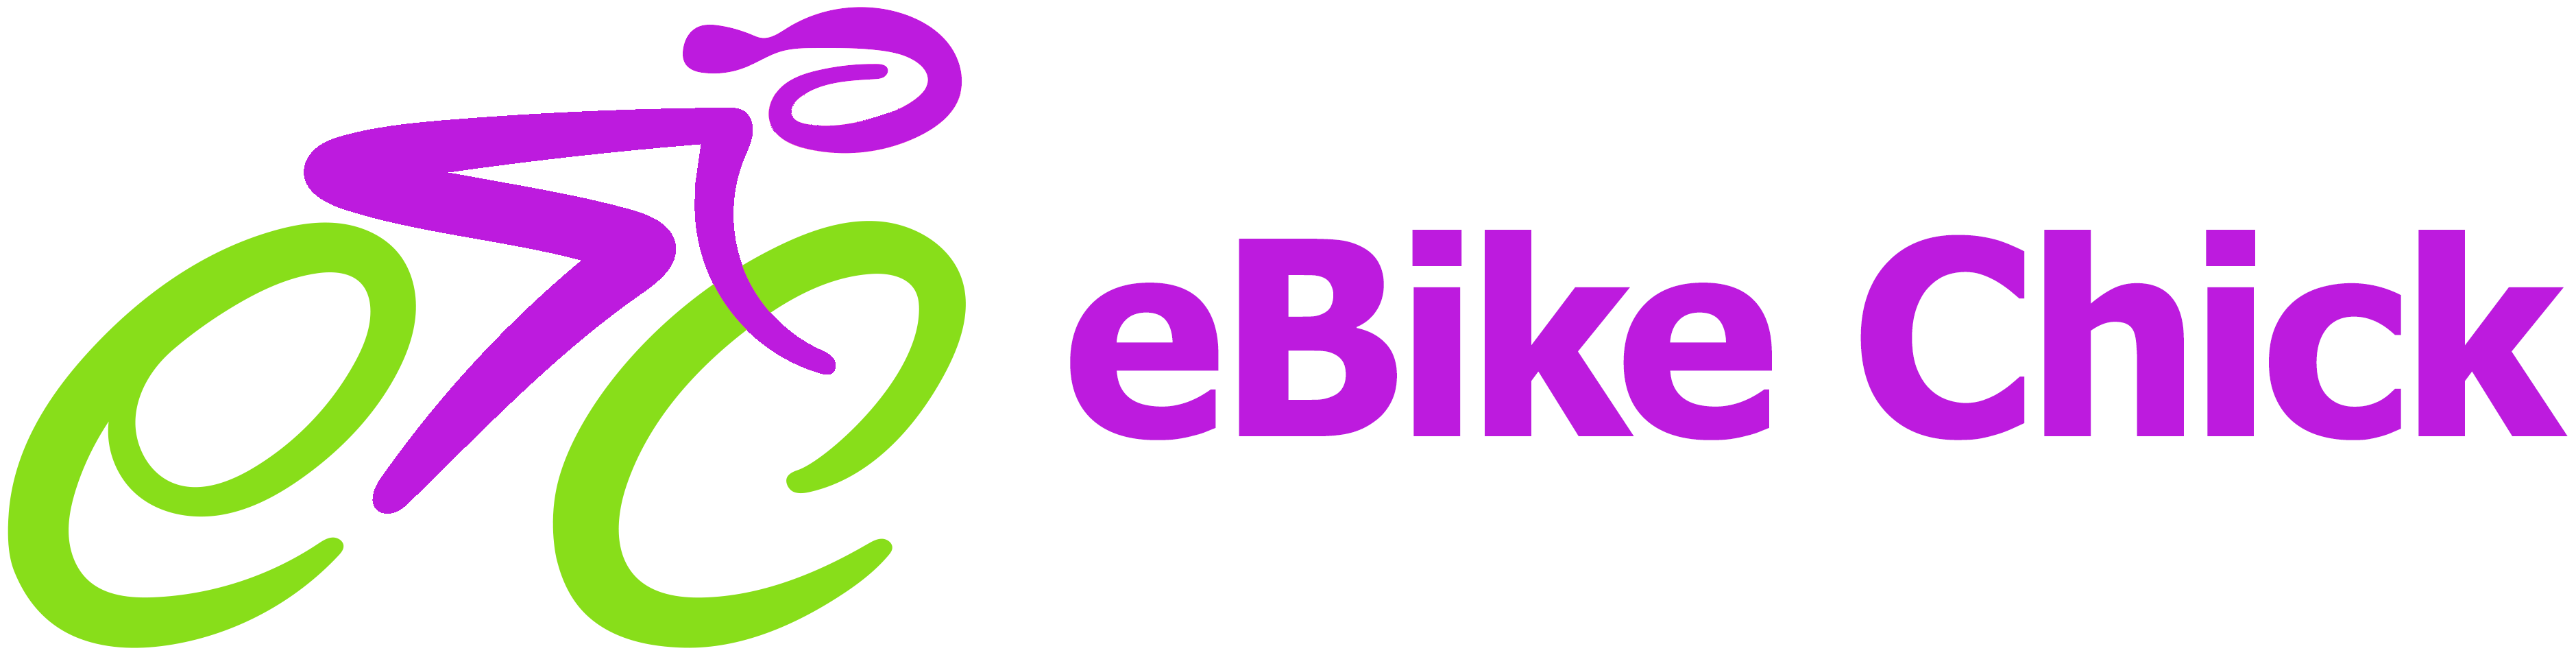 eBike Chick